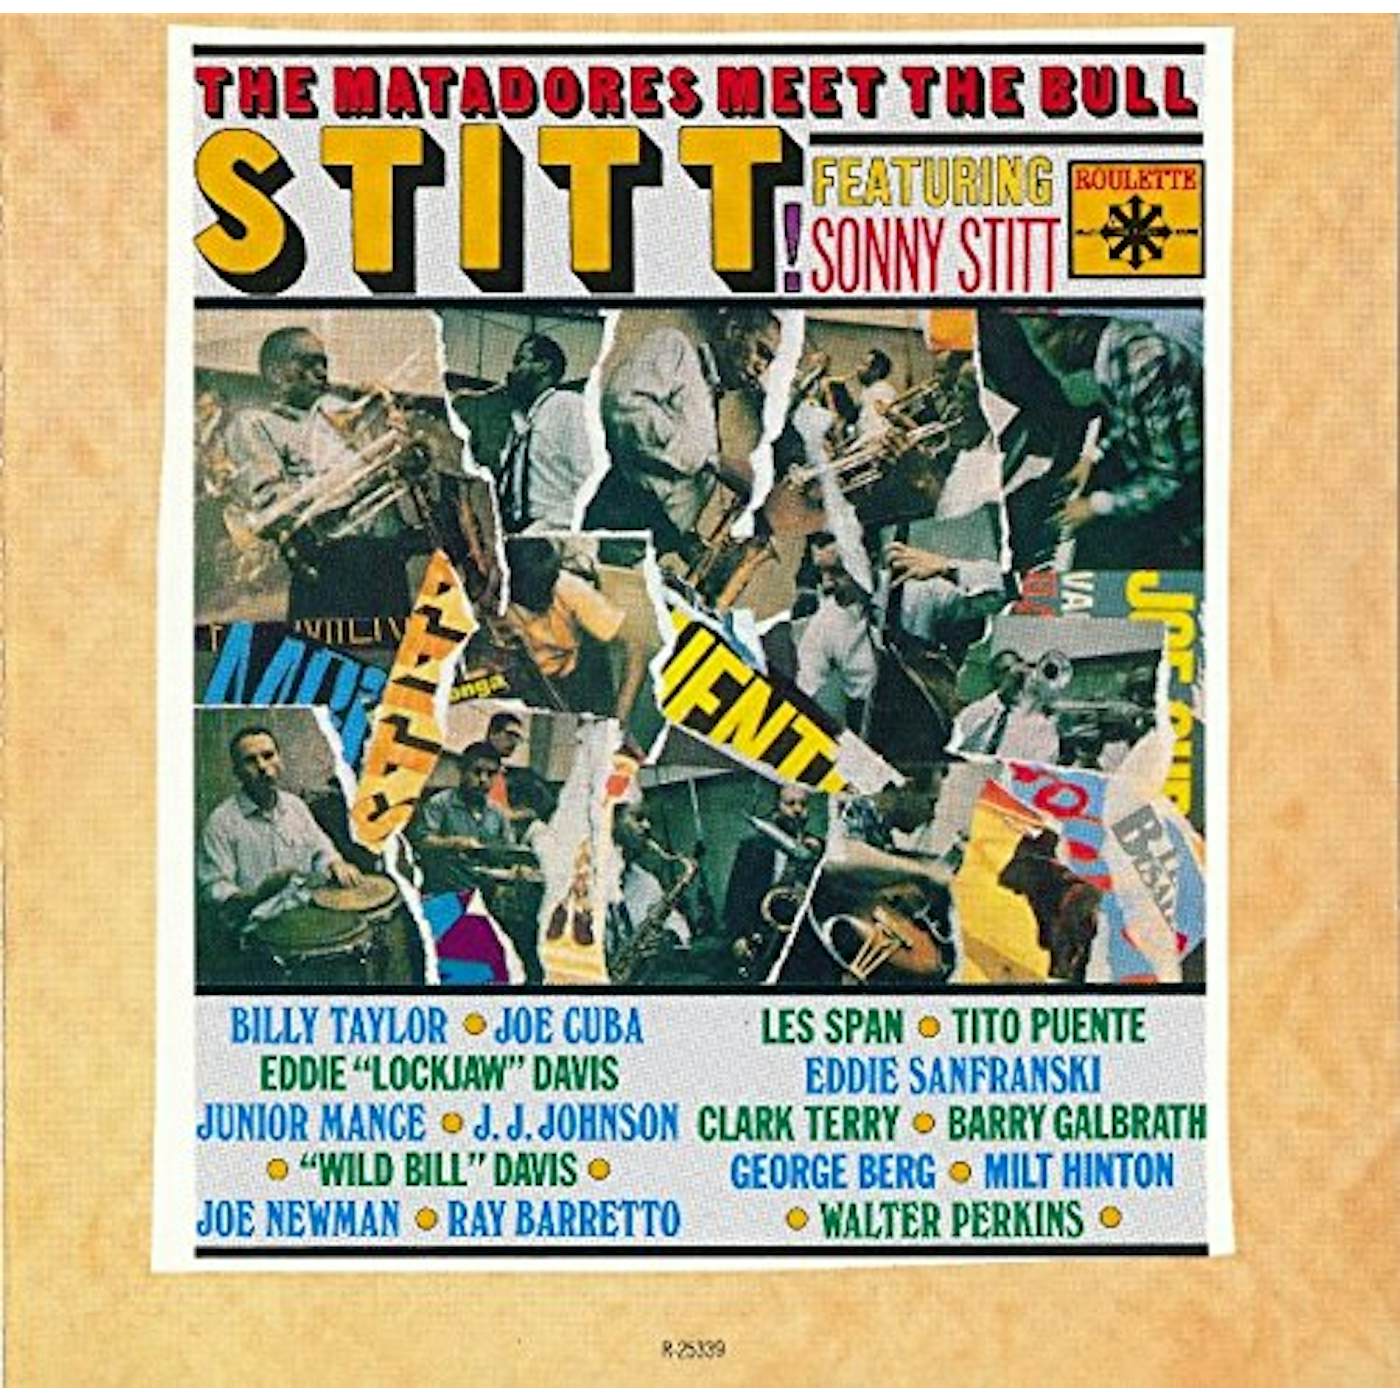 Sonny Stitt MATADORS MEET THE BULL: STITT! CD